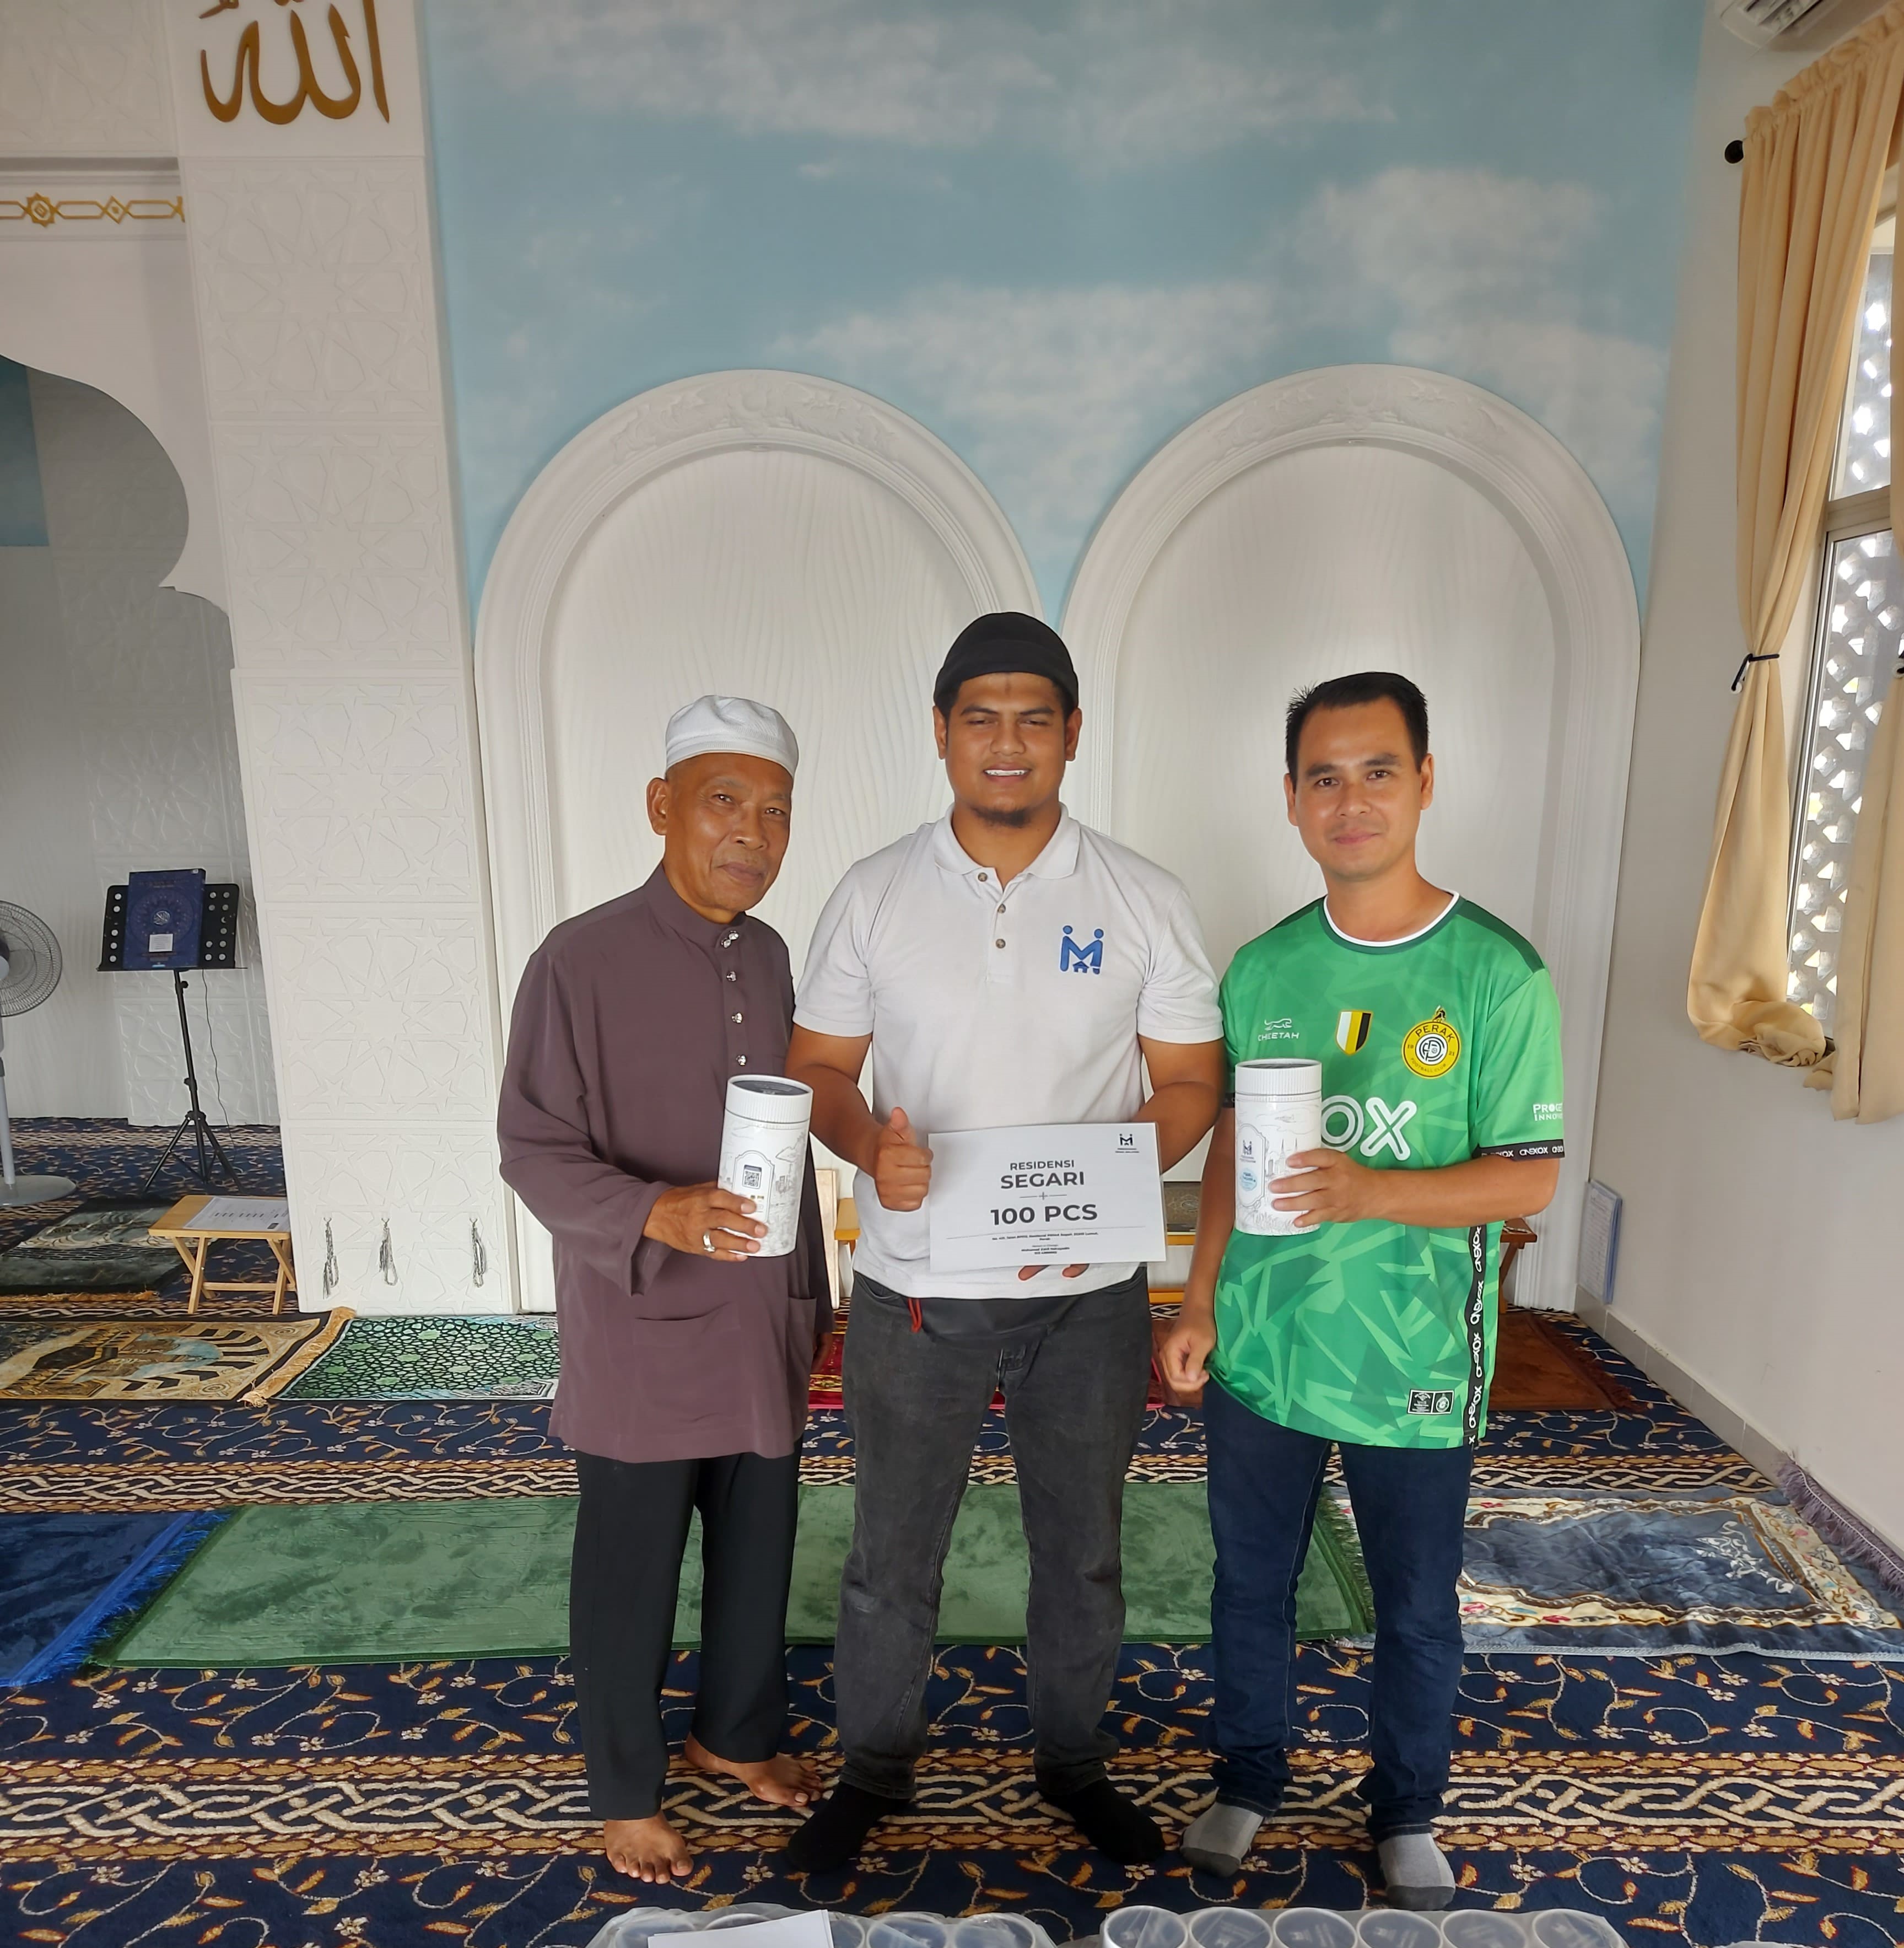 Cover image of Community Past Program: Sumbangan Ramadan – Distribution of Kurma to Residensi Segari, Perak.